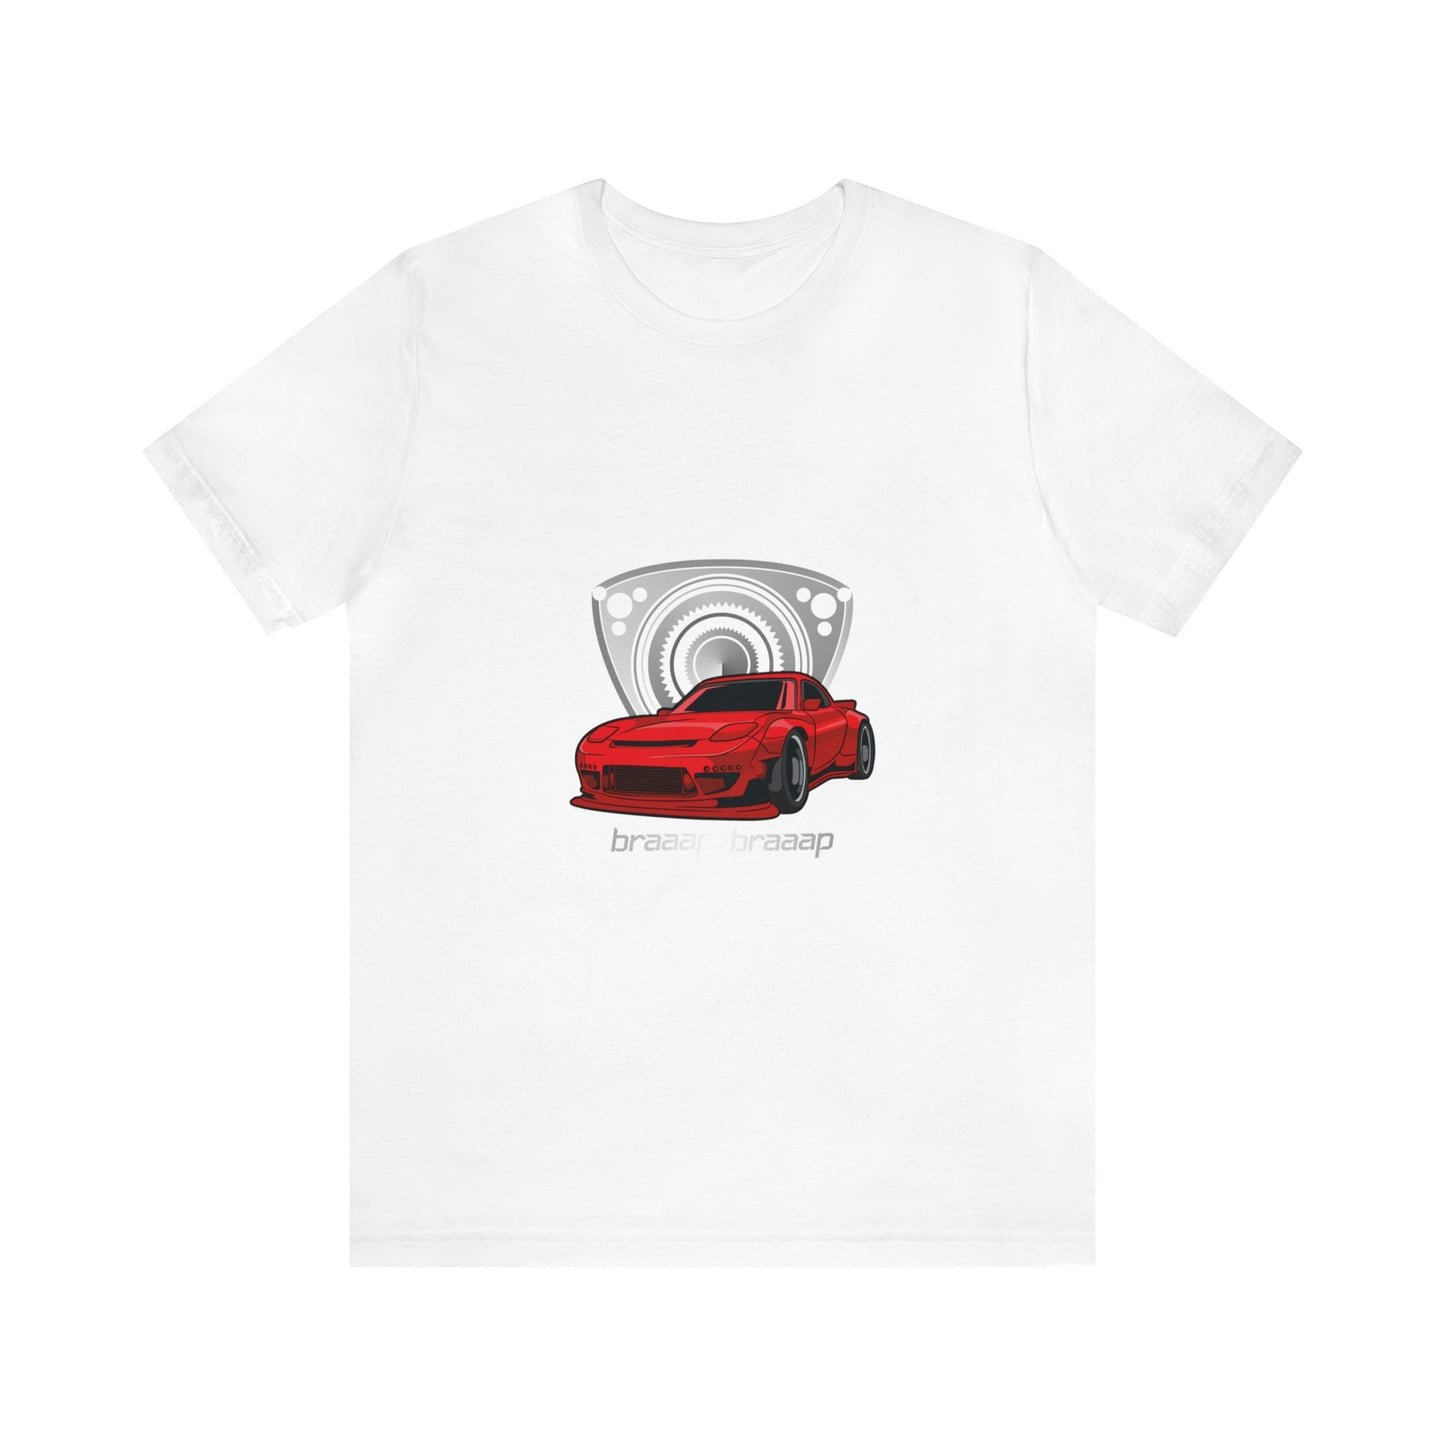 JDM Car Inspired T Shirt 25.